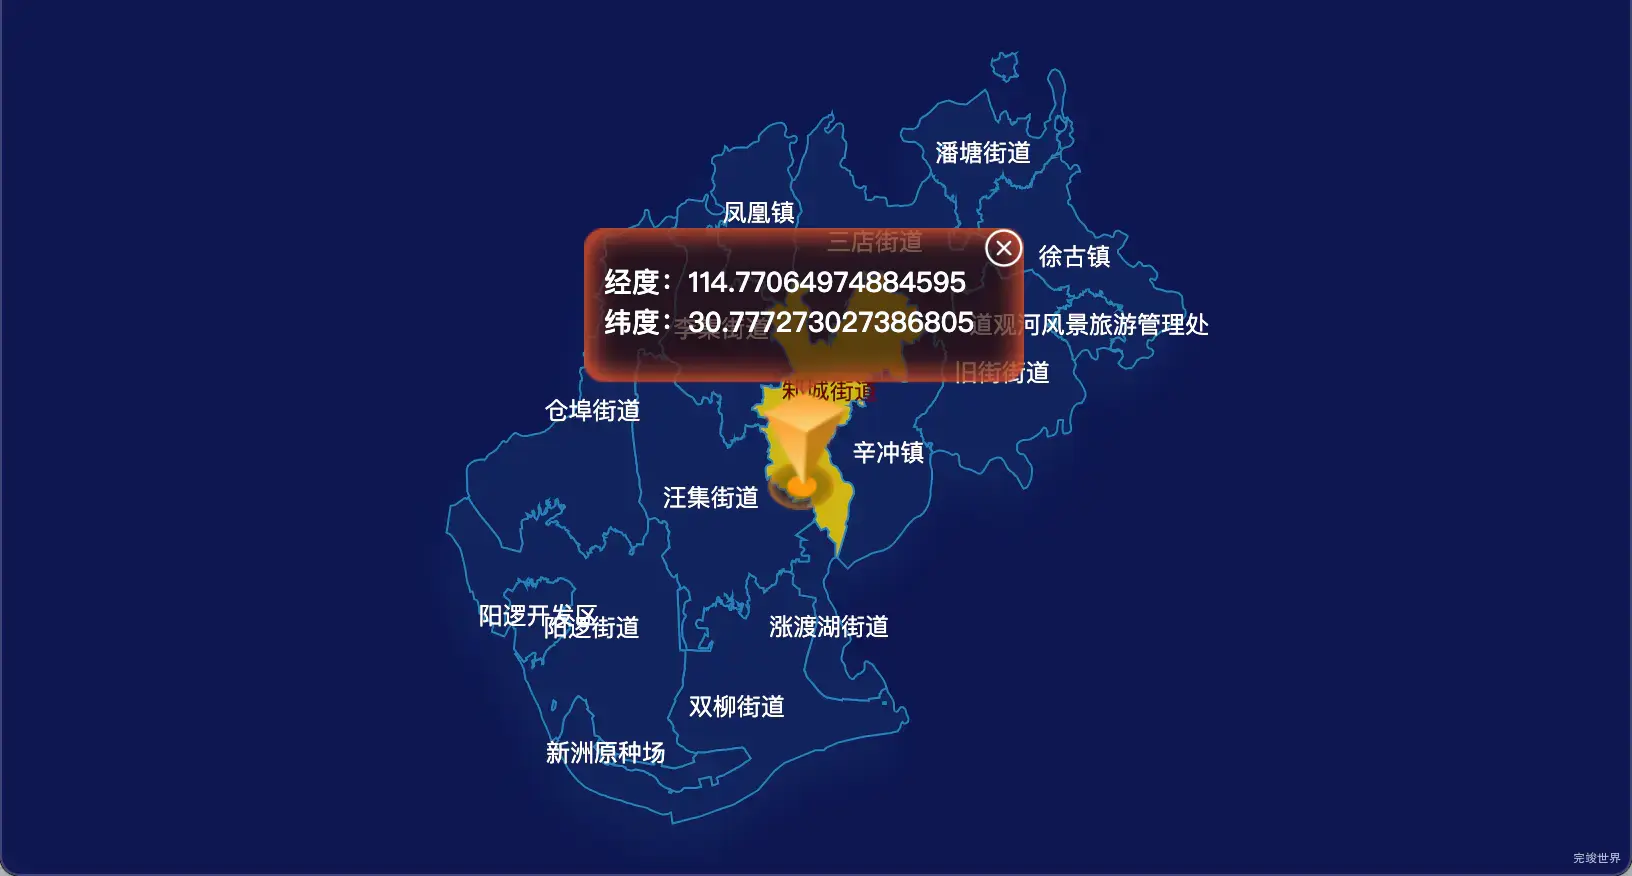 22 echarts 武汉市新洲区geoJson地图点击地图获取经纬度